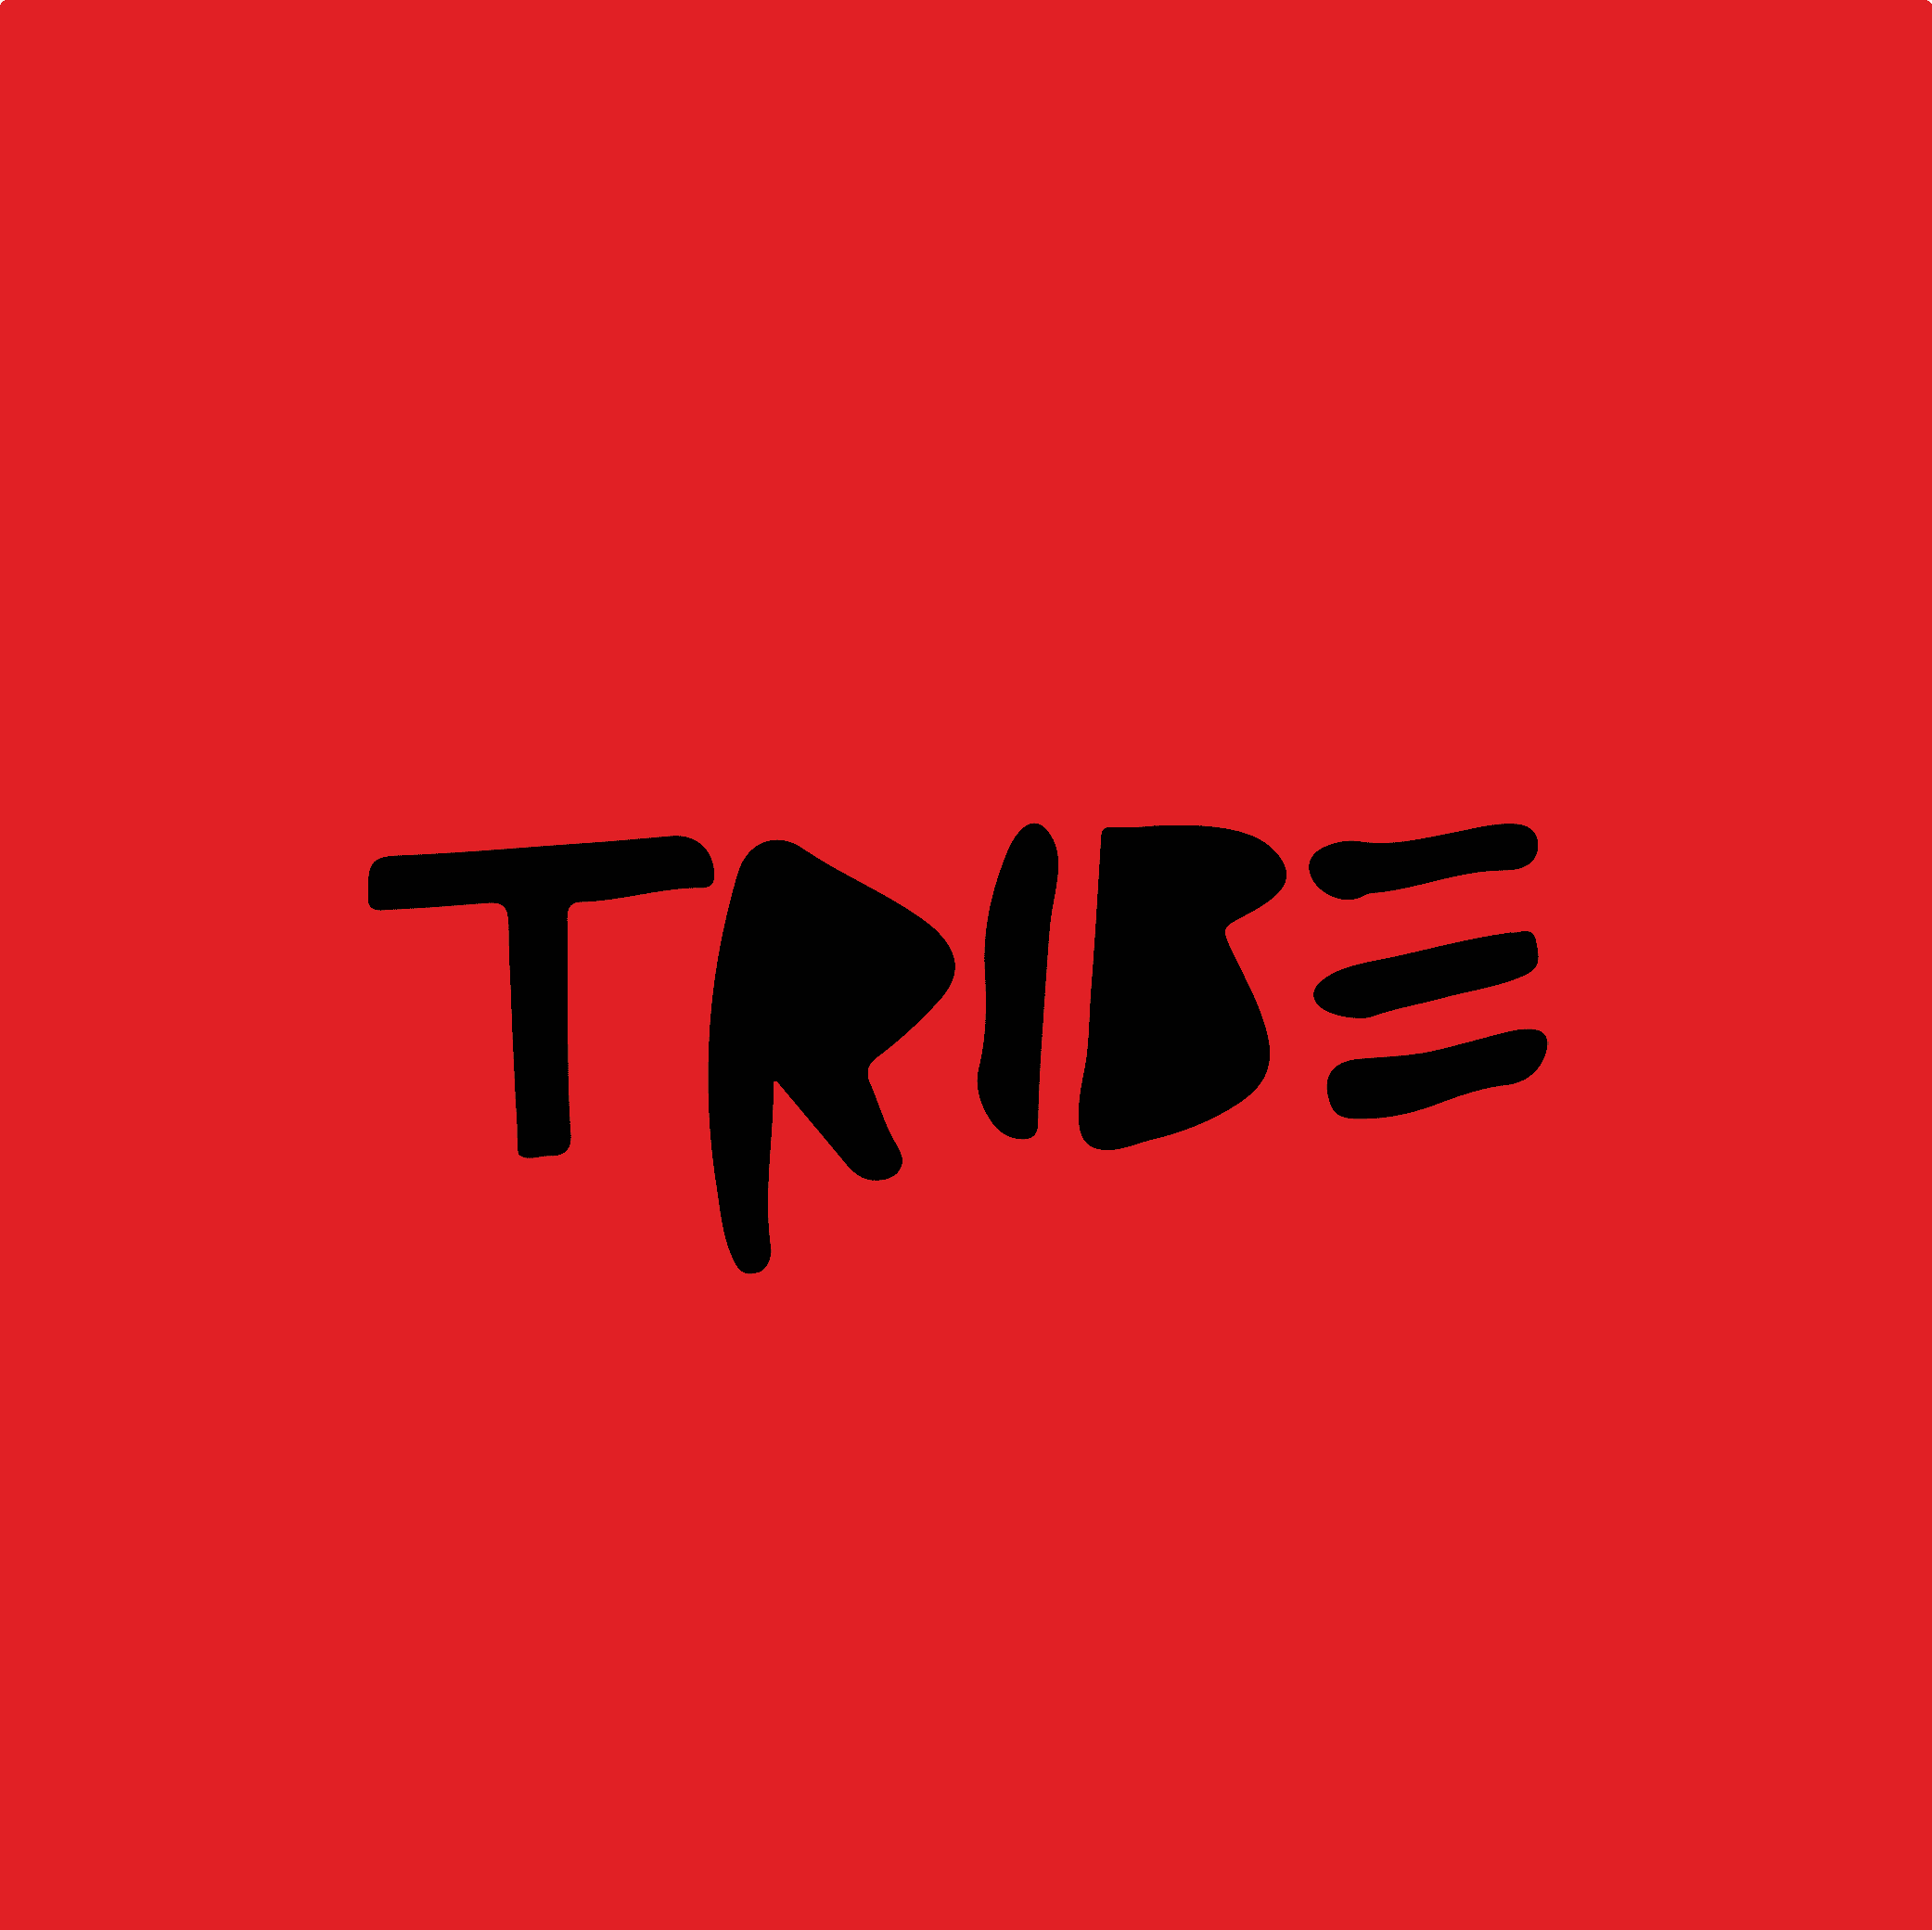 Tribe-Deployer